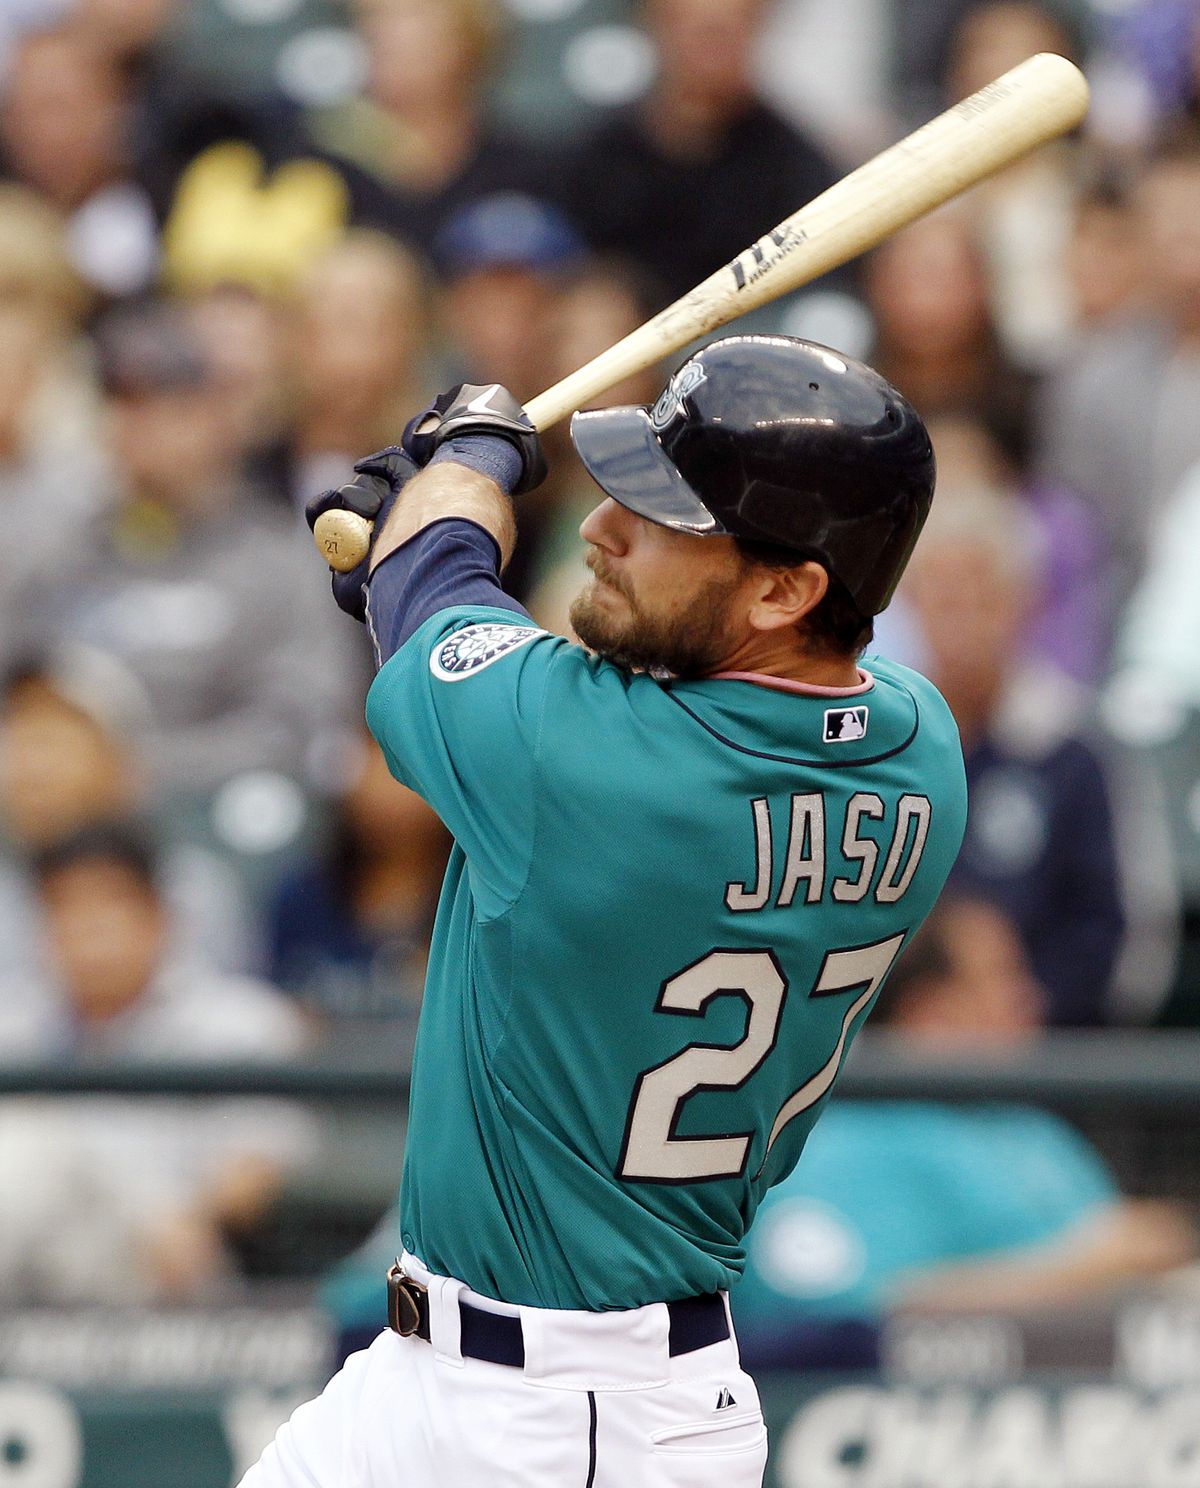 M’s John Jaso watches his 3-run homer in first inning. (Associated Press)